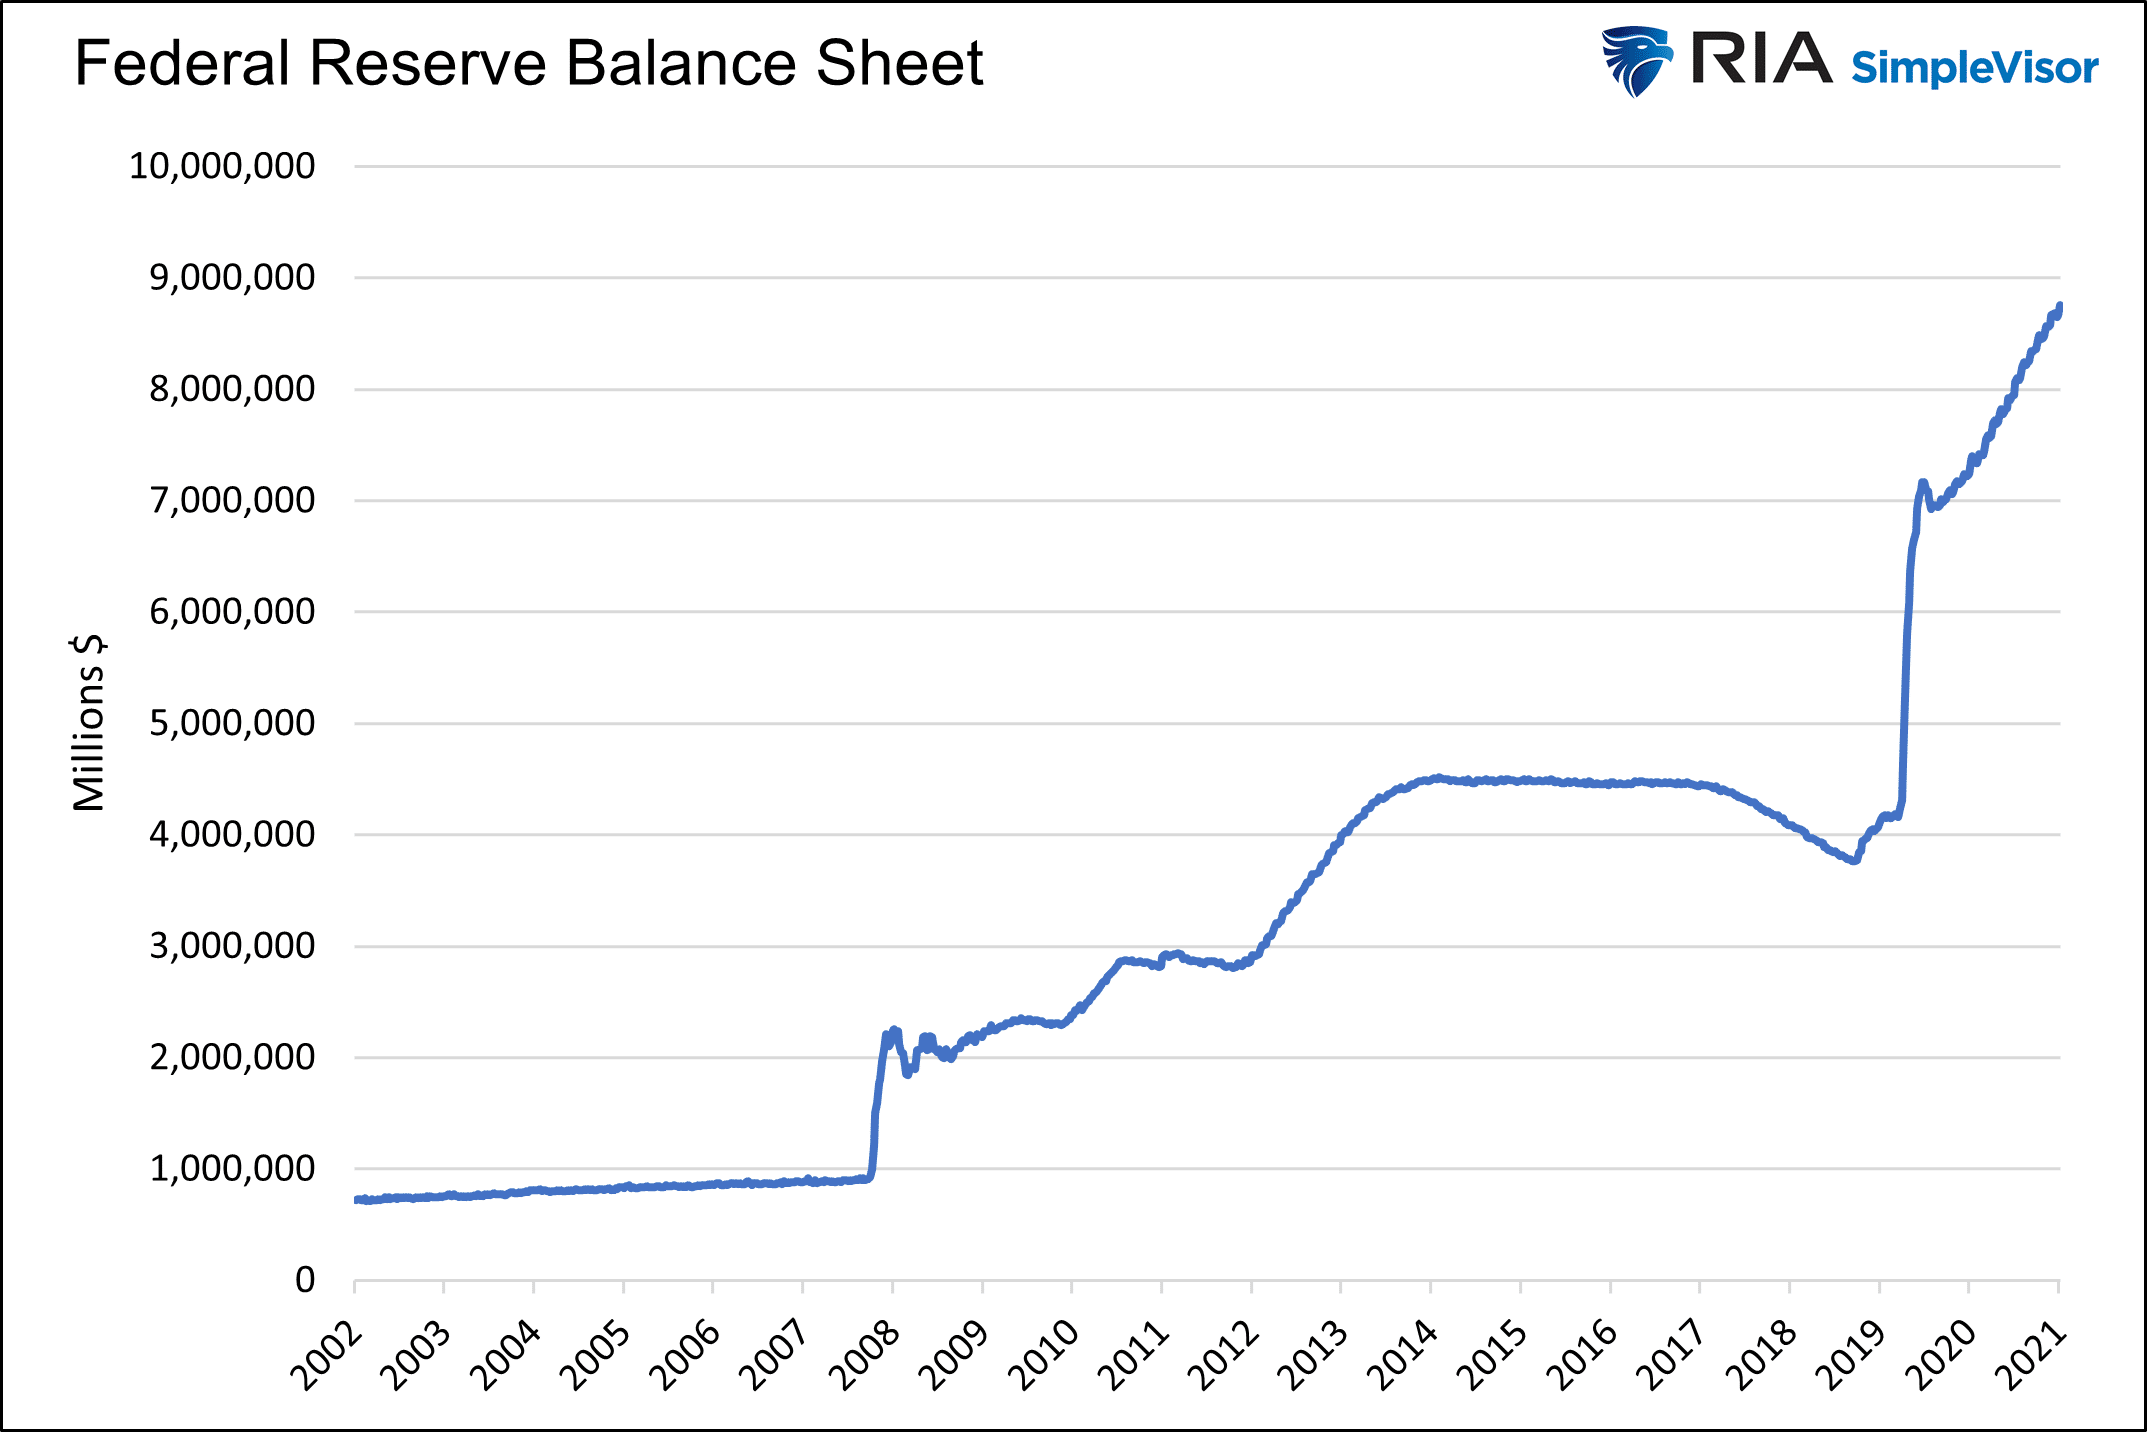 Fed Reserve Balance Sheet